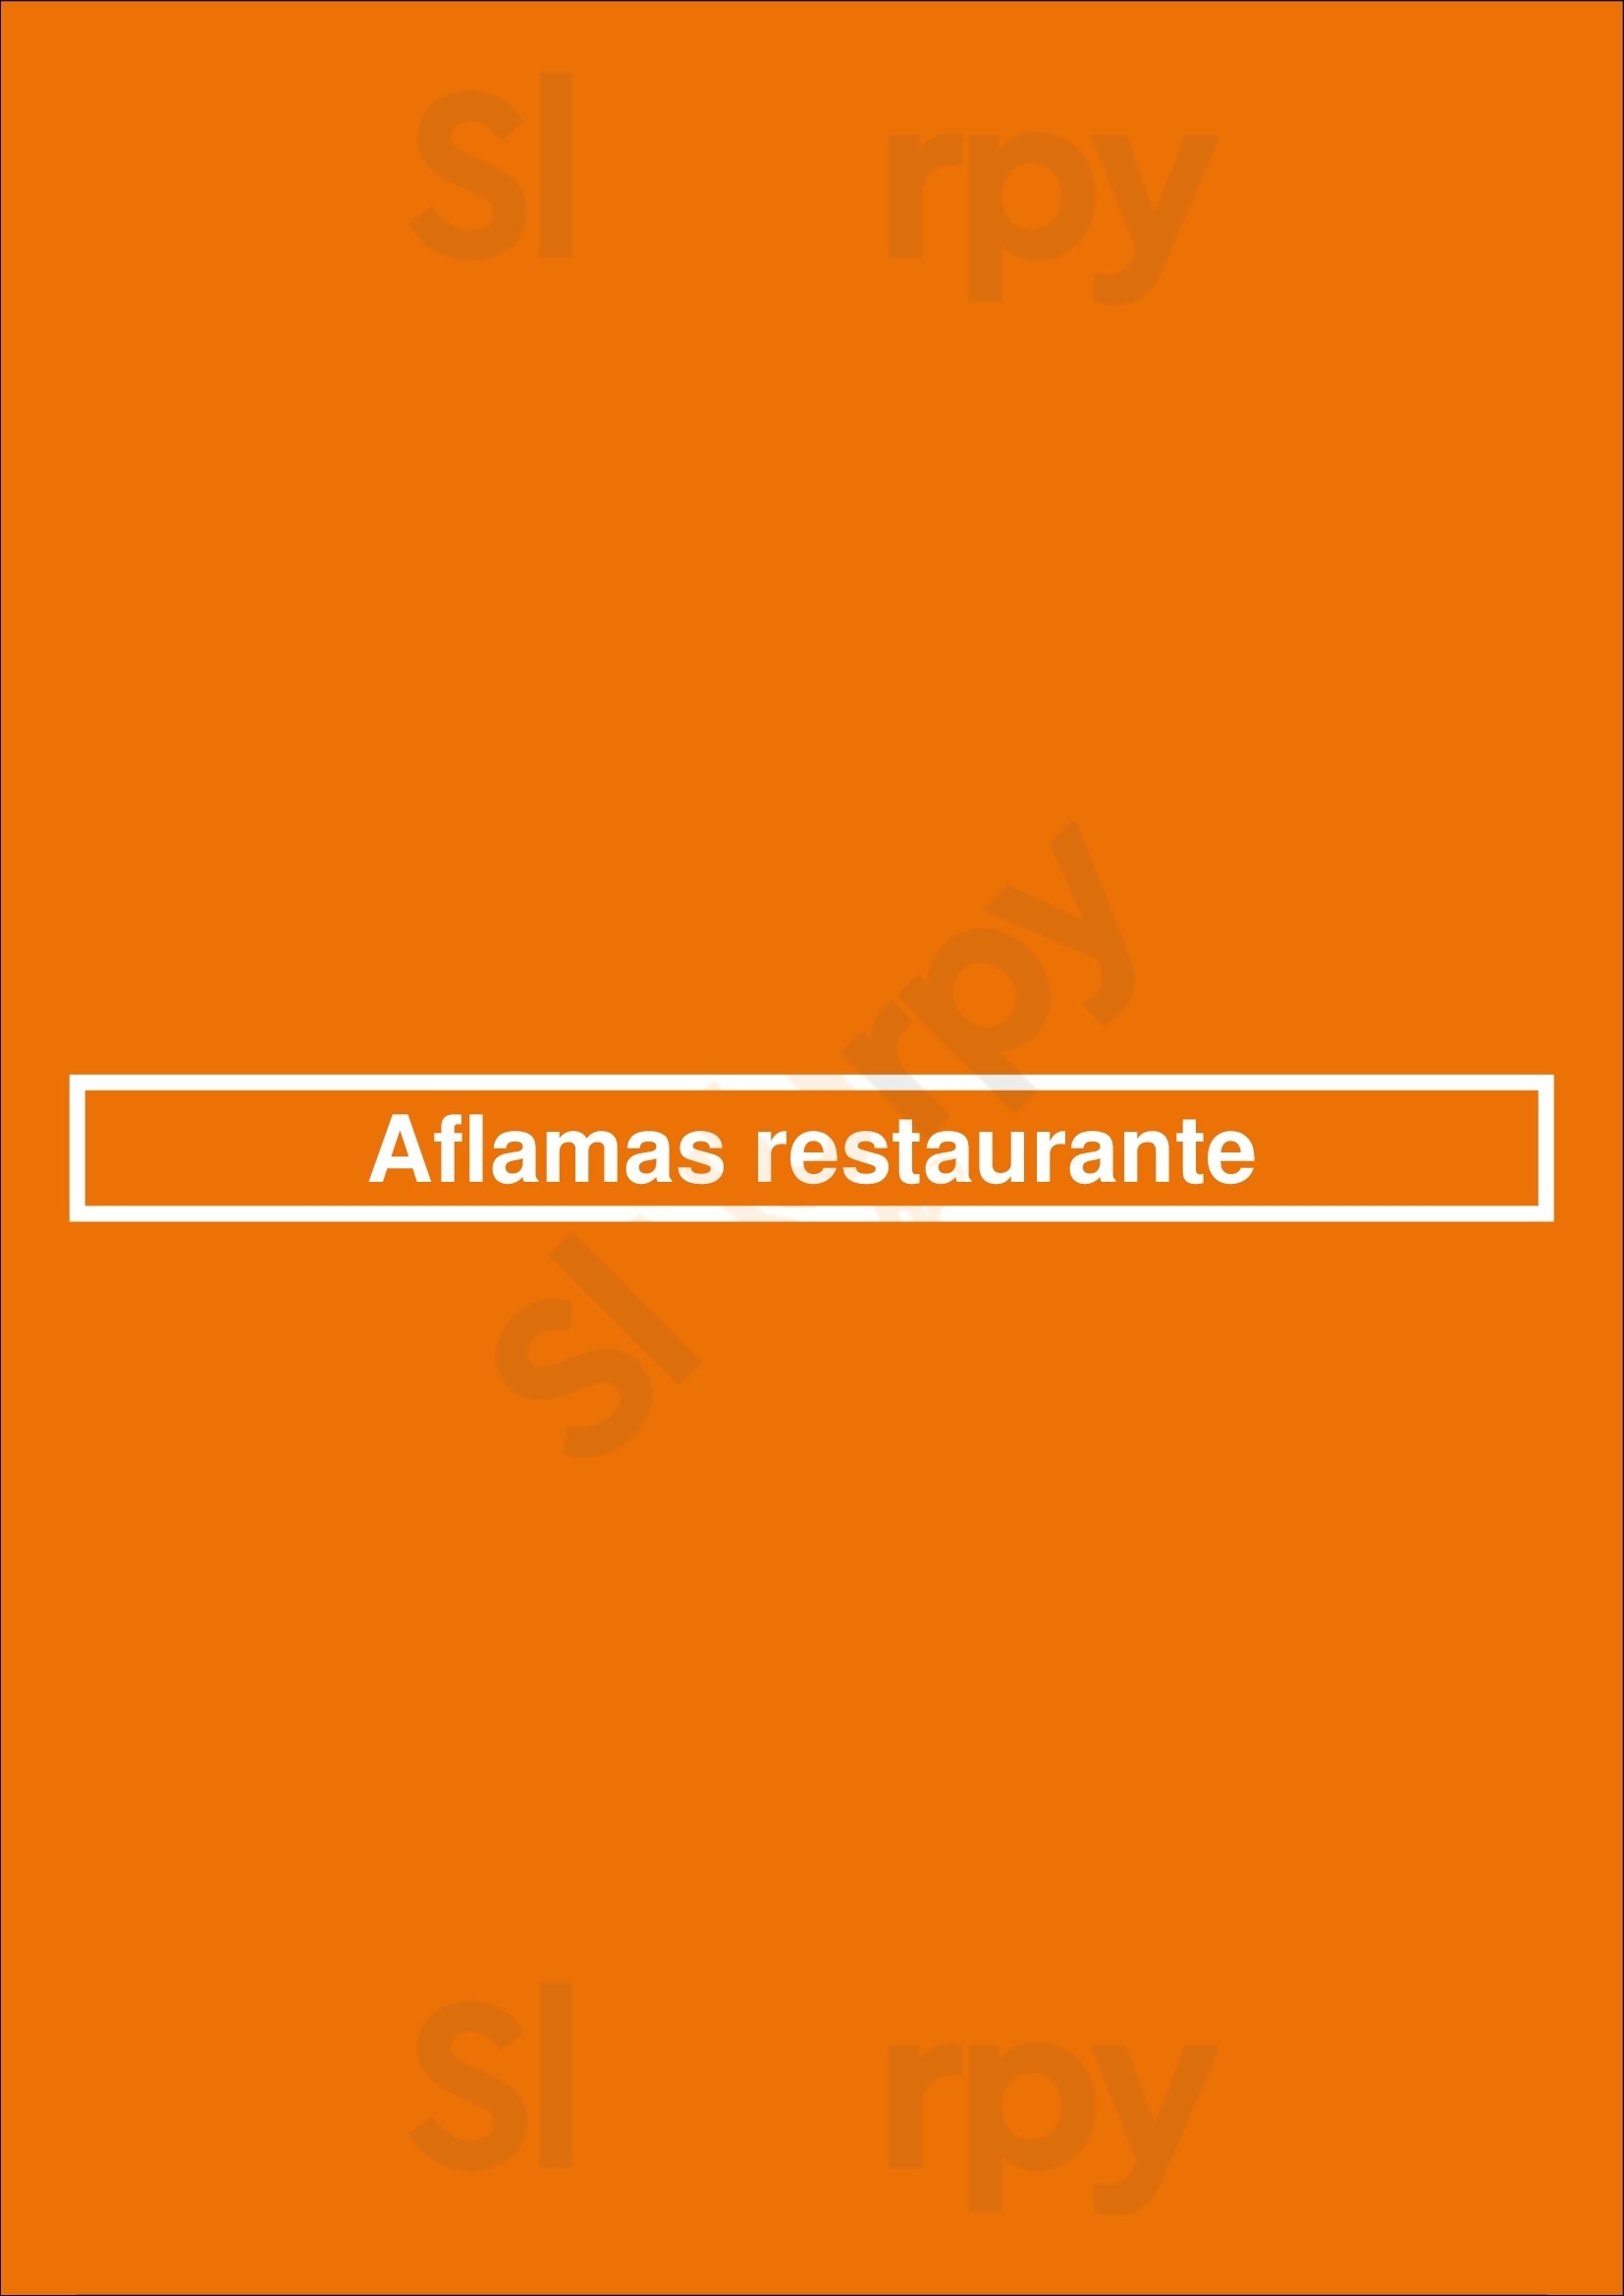 Aflamas Restaurante Barcelona Menu - 1